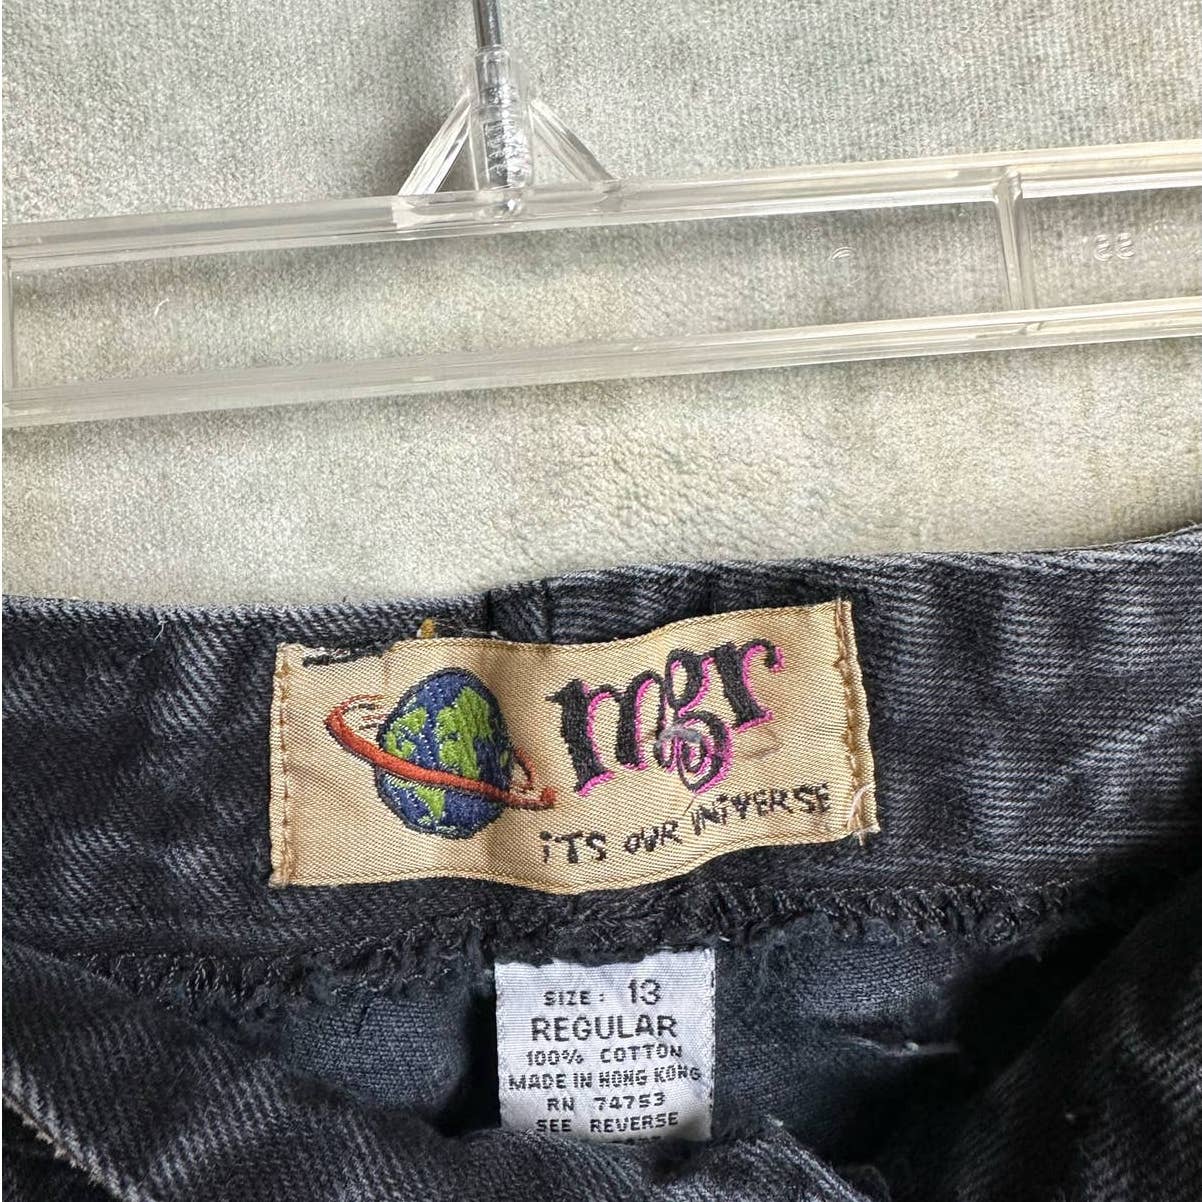 Vintage 90s Black Denim Jeans Size 13